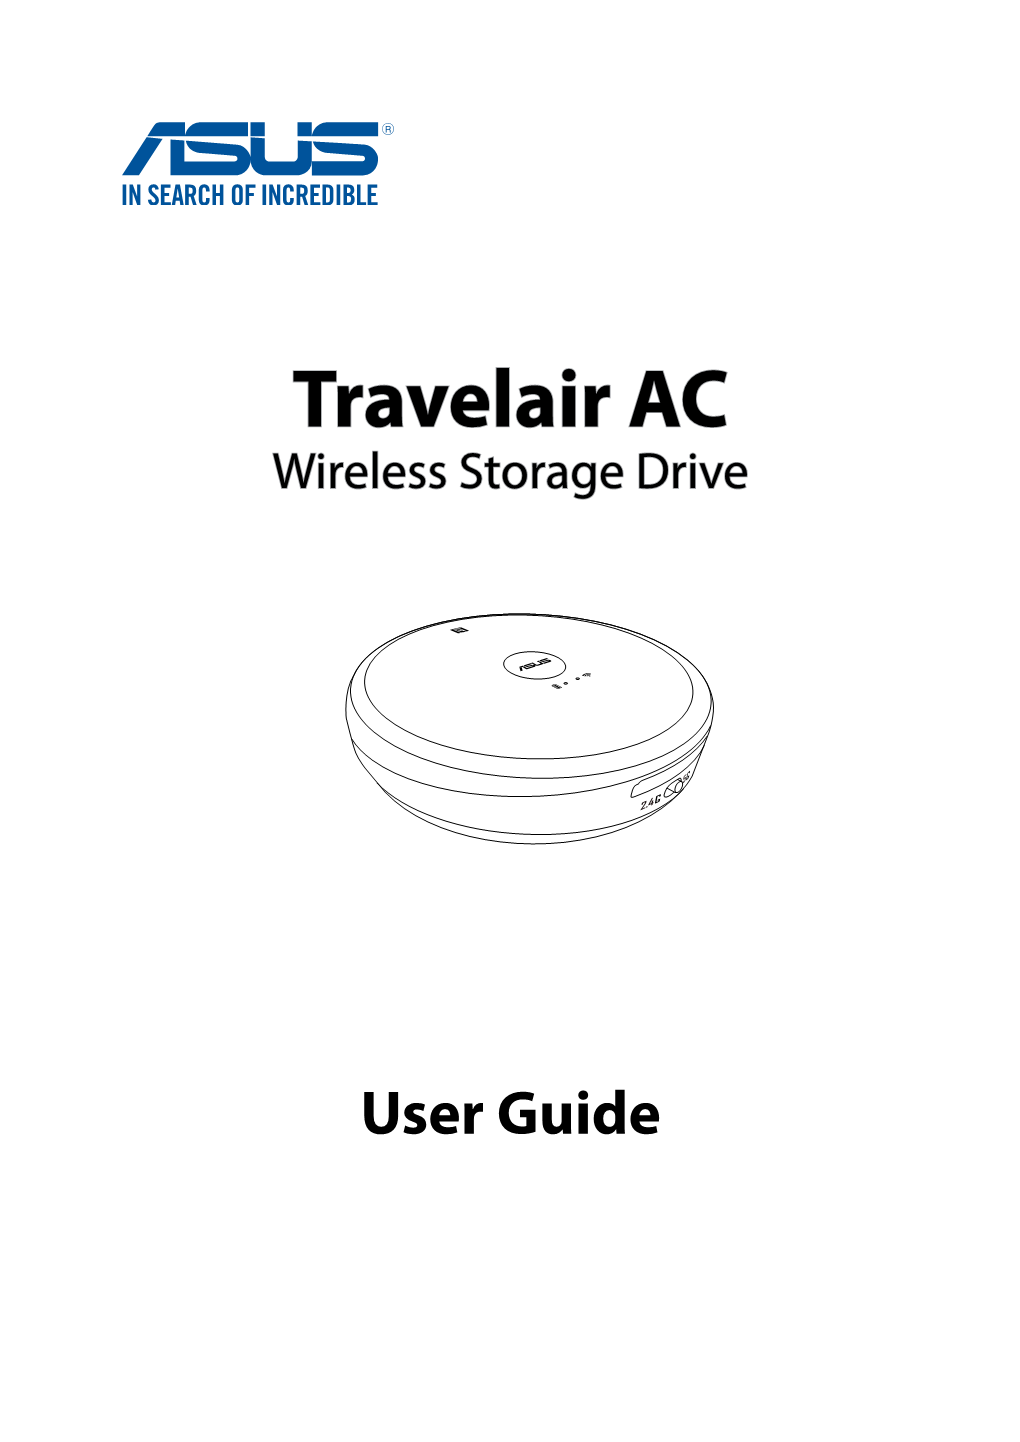 Travelair AC Wireless Storage Drive